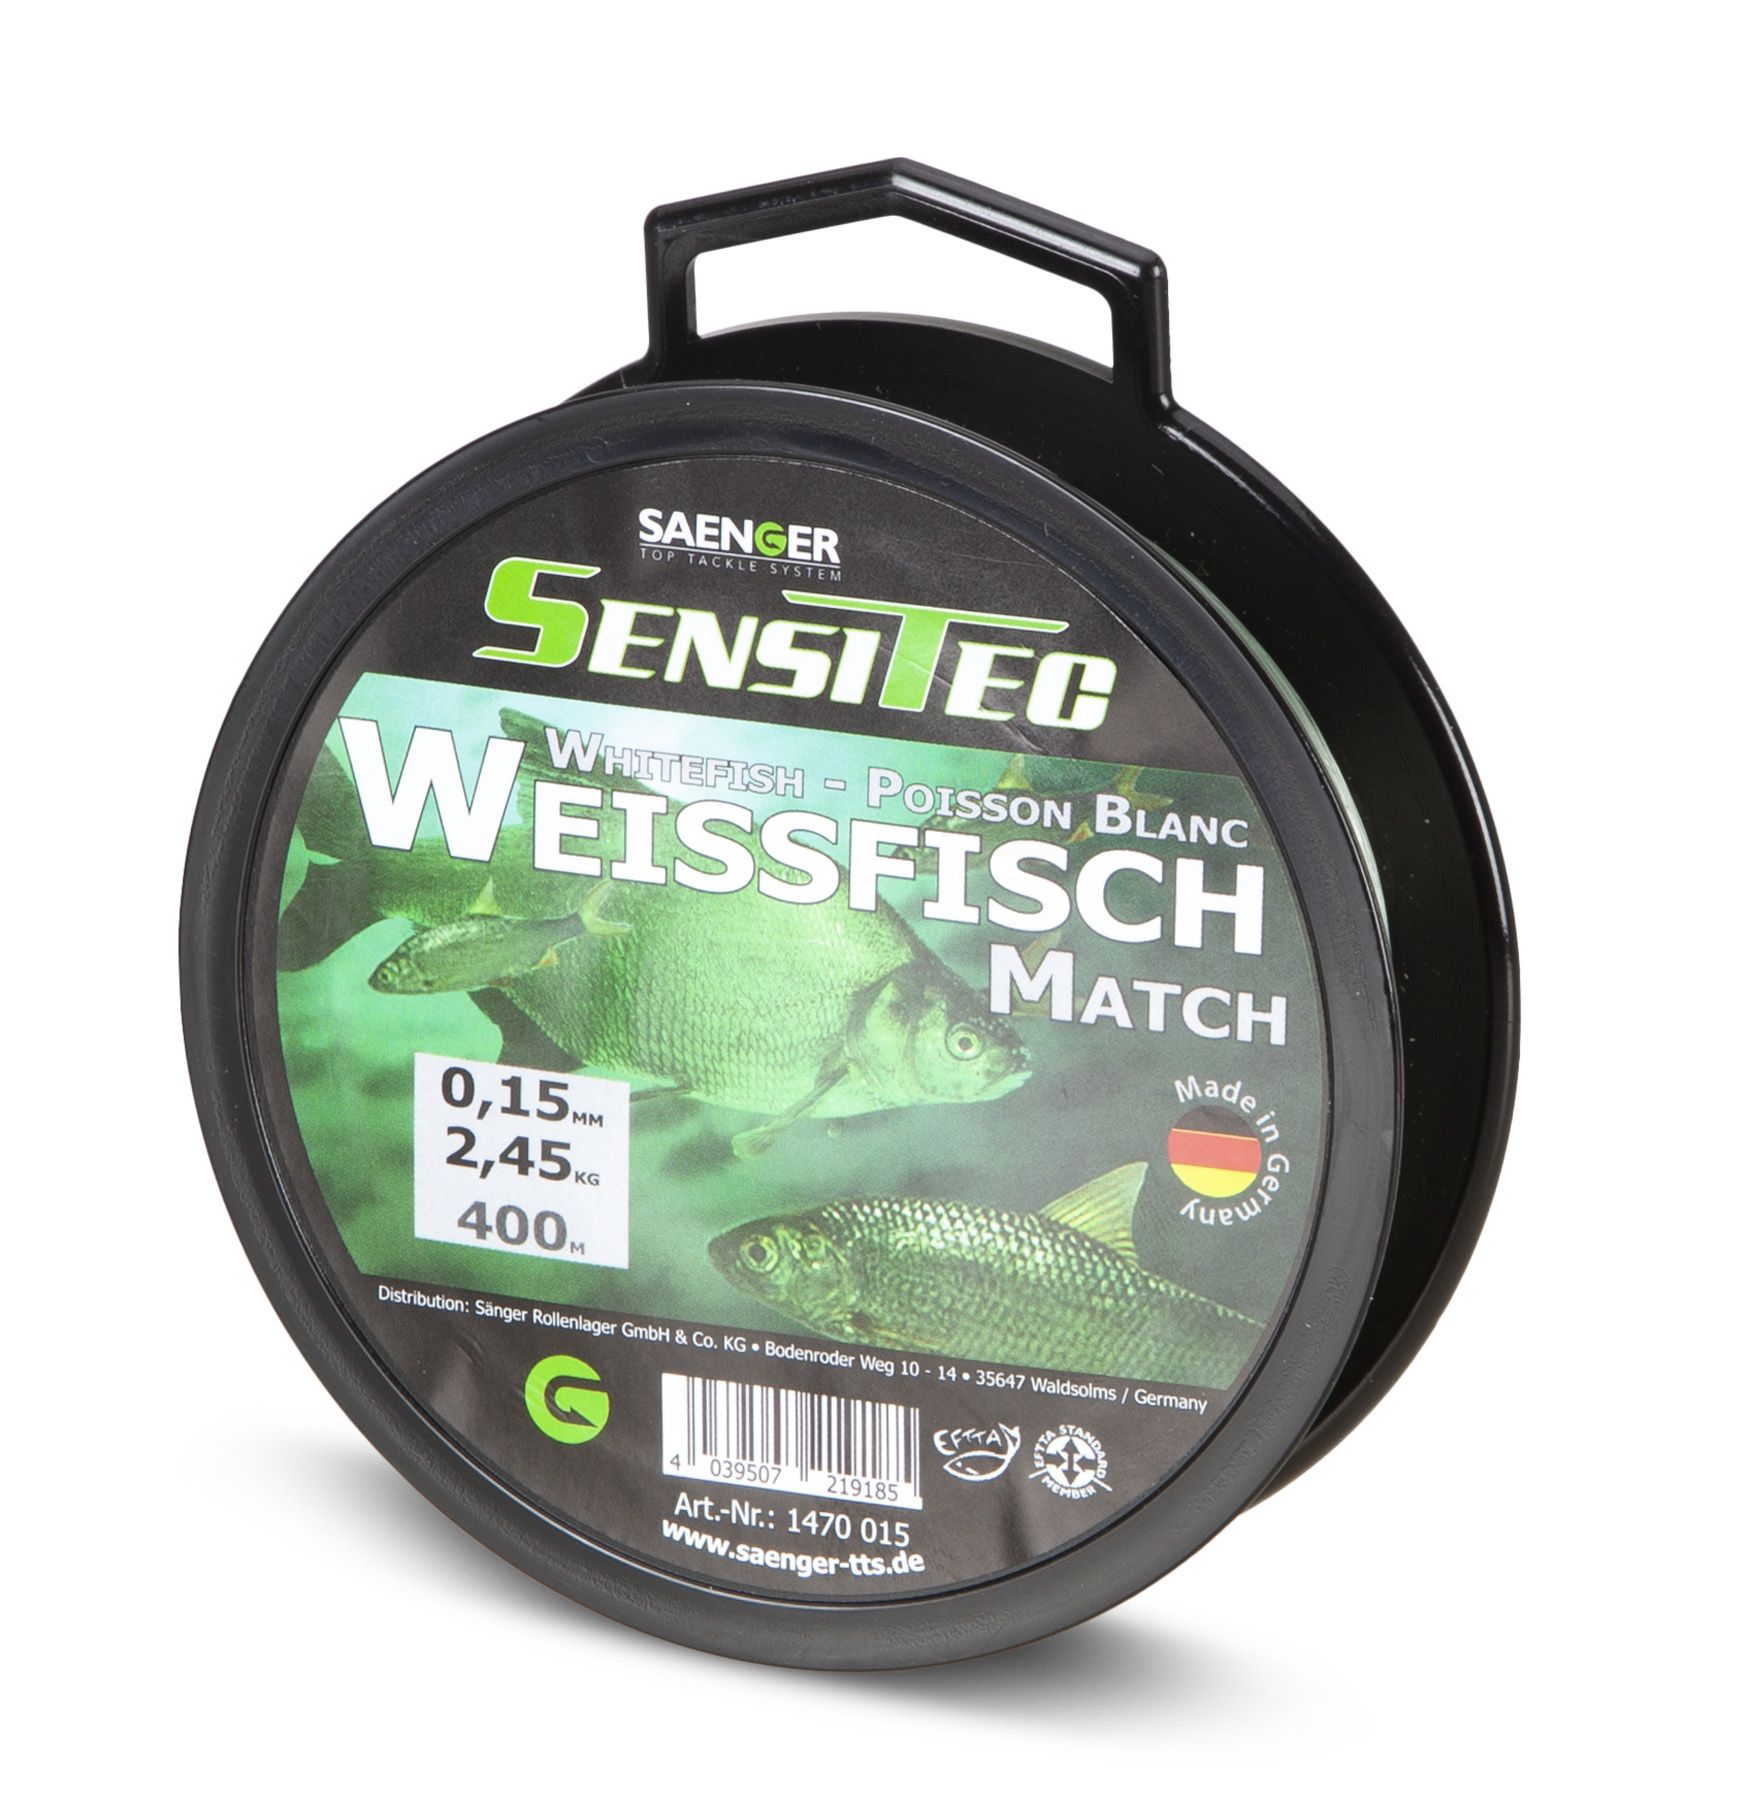 Sensitec Match Weißf. limpid green 400m 0,20 mm